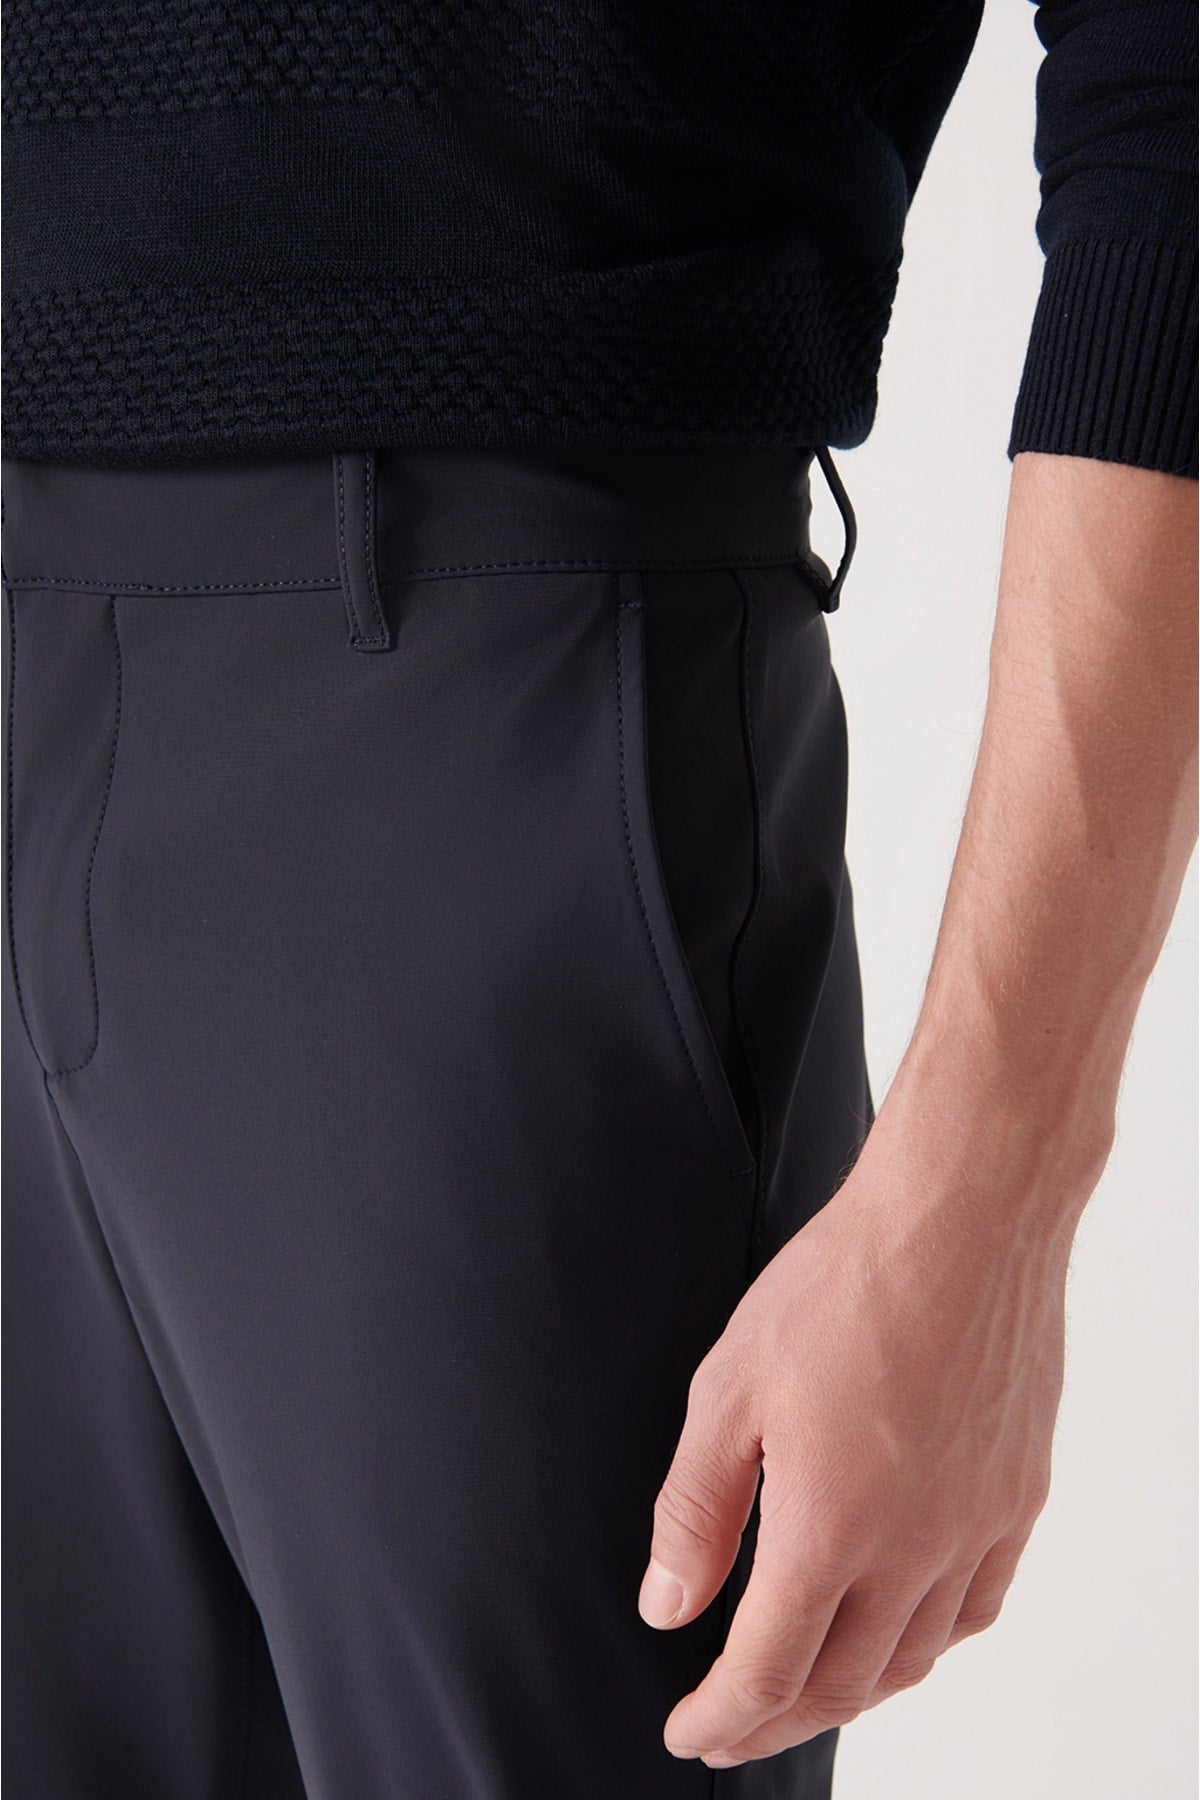 Men's Navy Softshell Slim Fit Chino Pants A22y3003